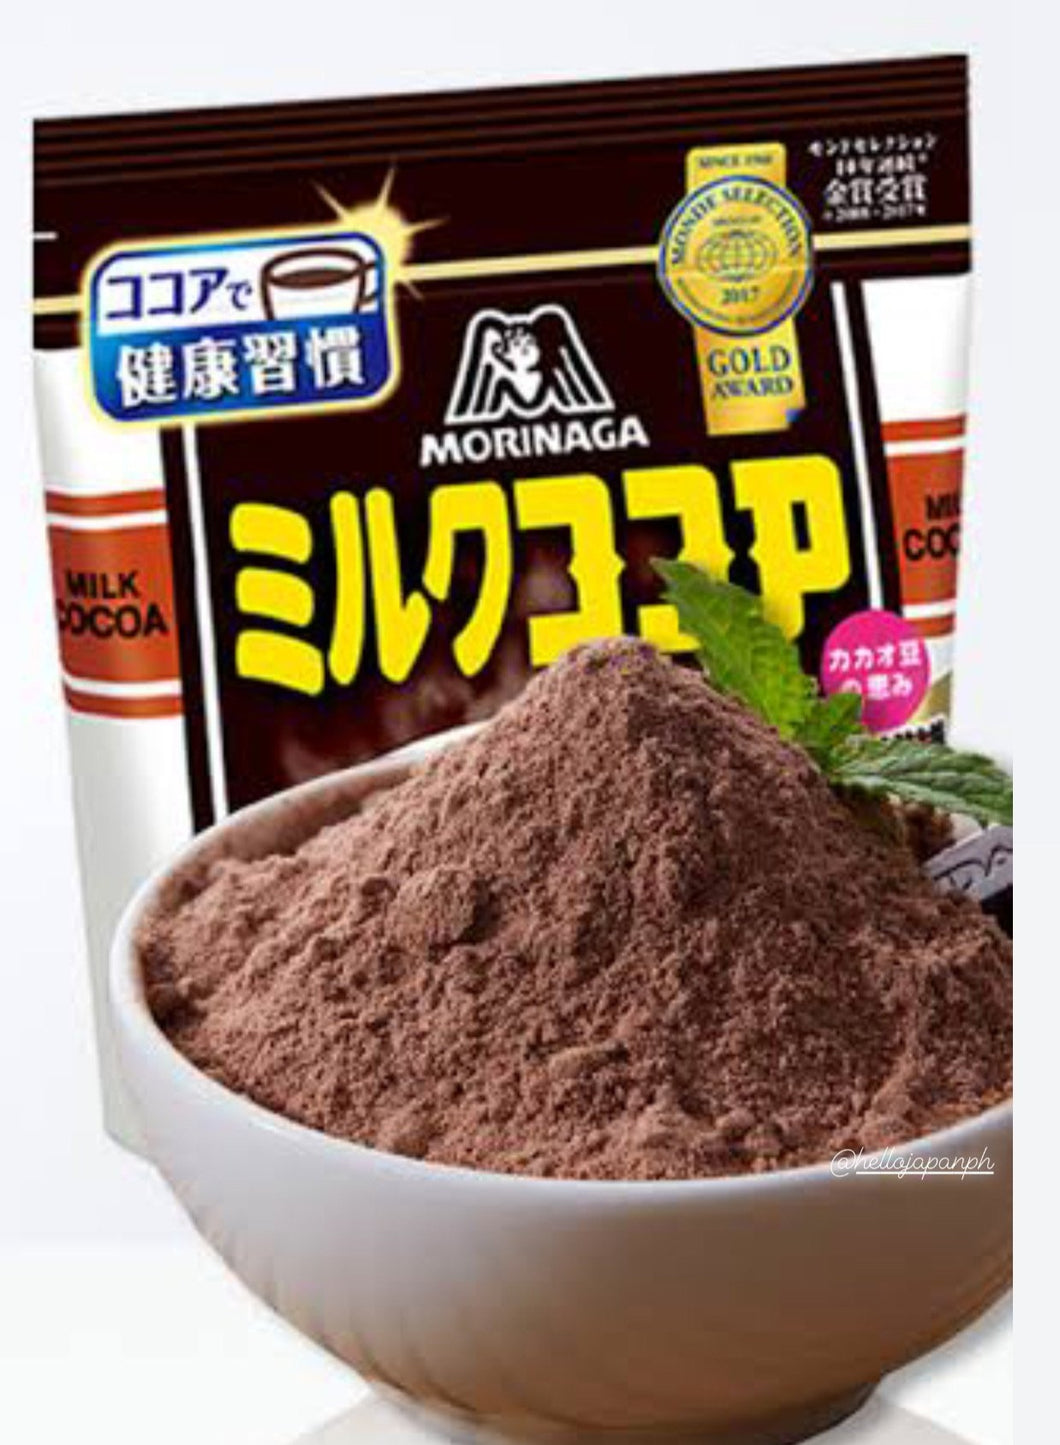 Morinaga Milk Cocoa Powder